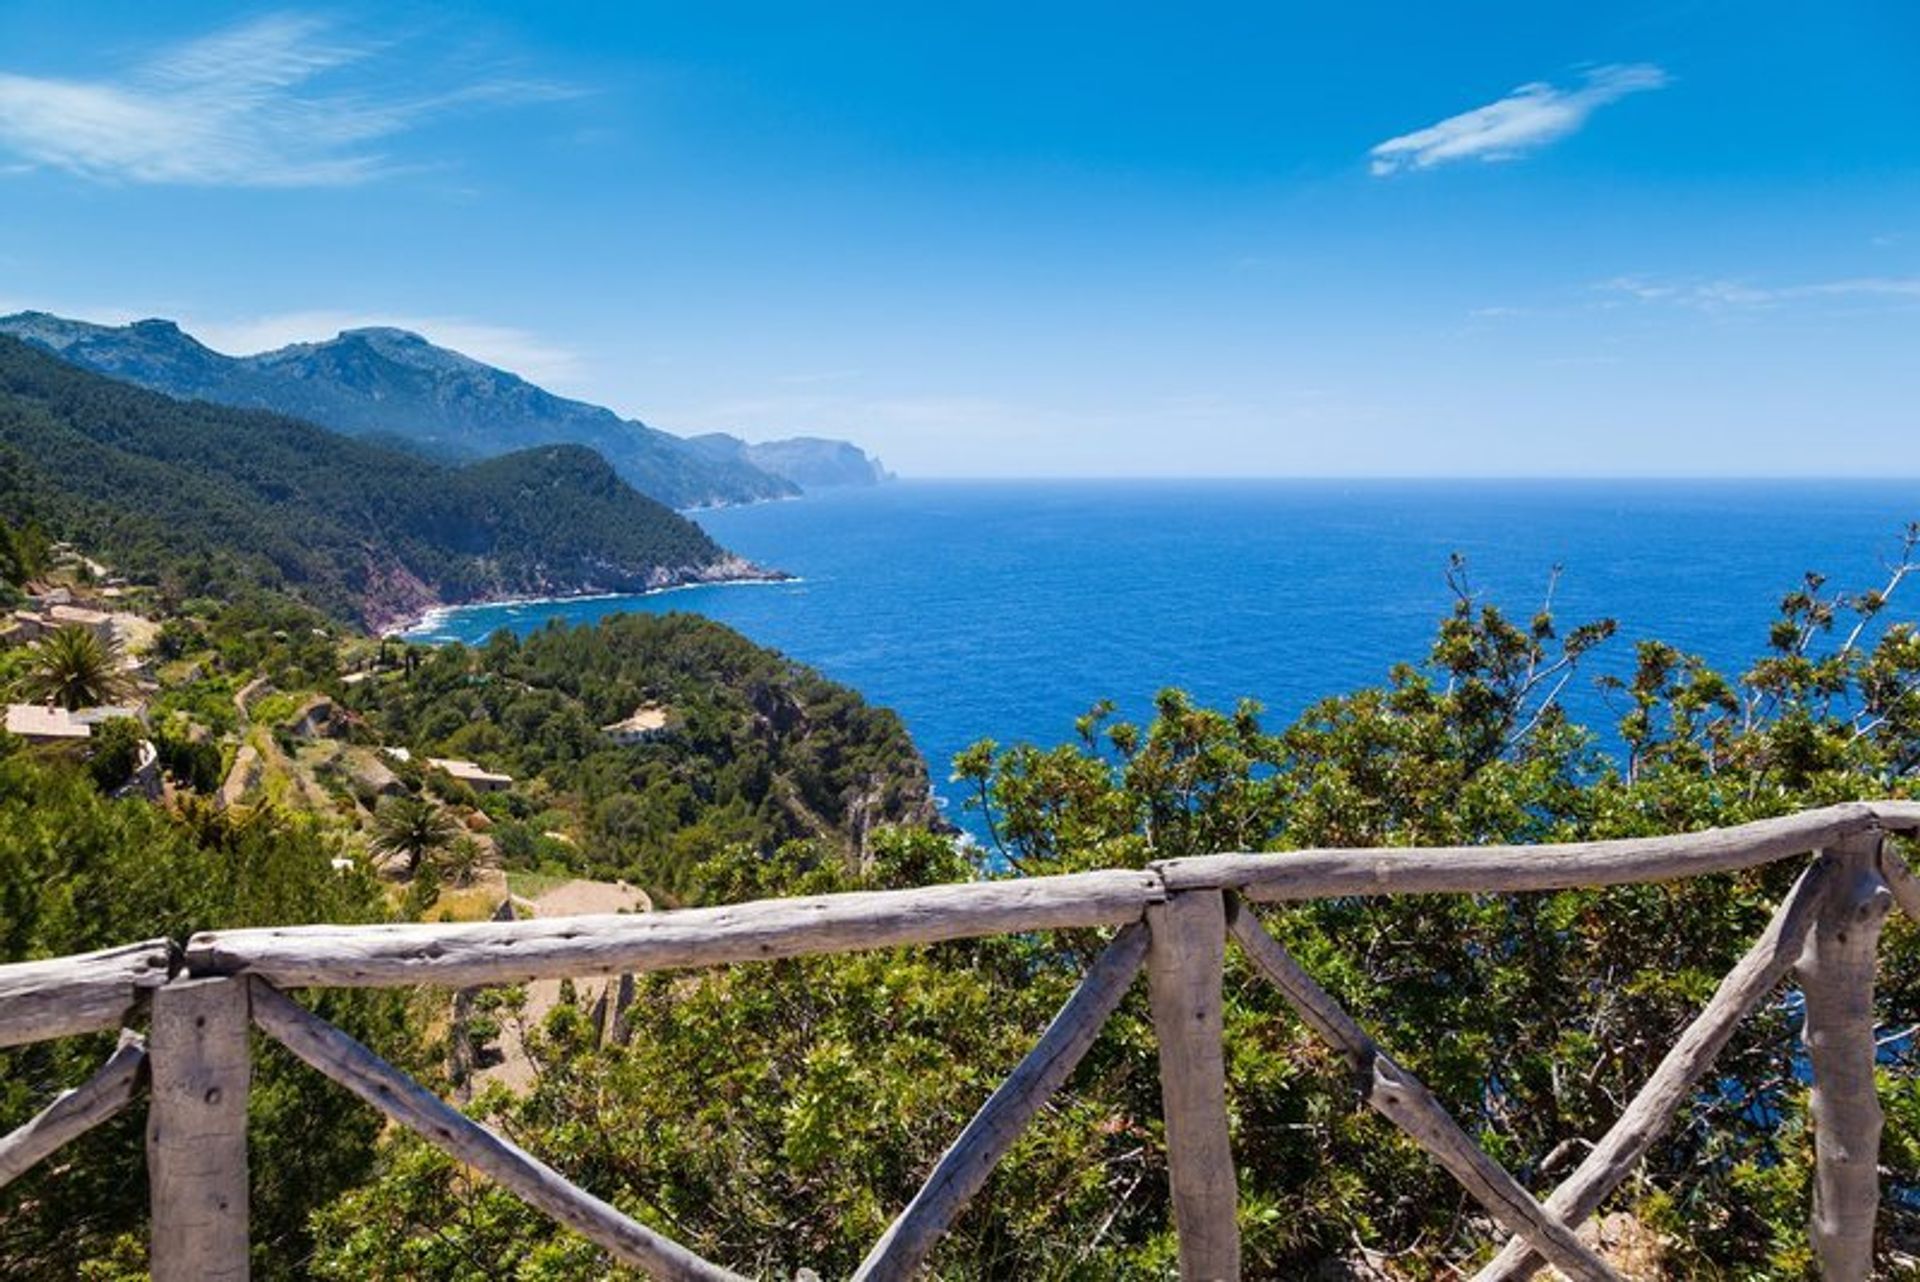 Stunning views from Tramuntana mountain range, north Majorca